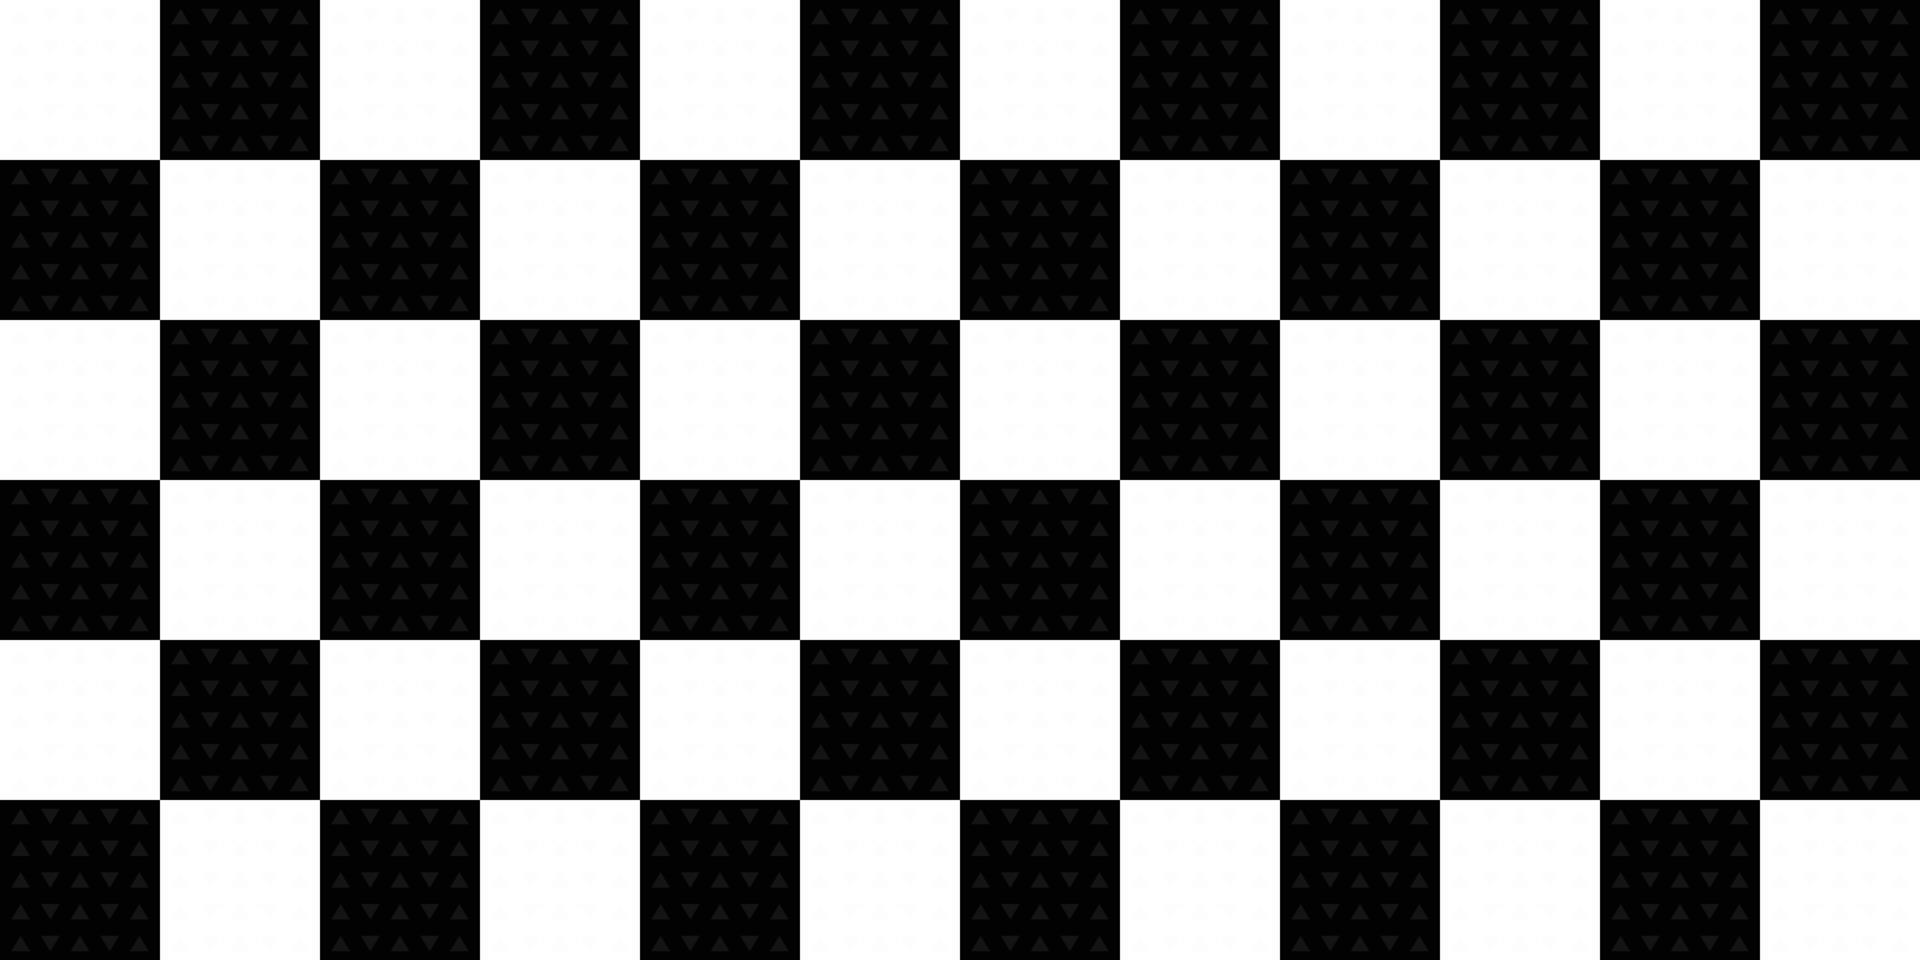 Padrão xadrez xadrez em preto e branco. fundo de tecido de textura